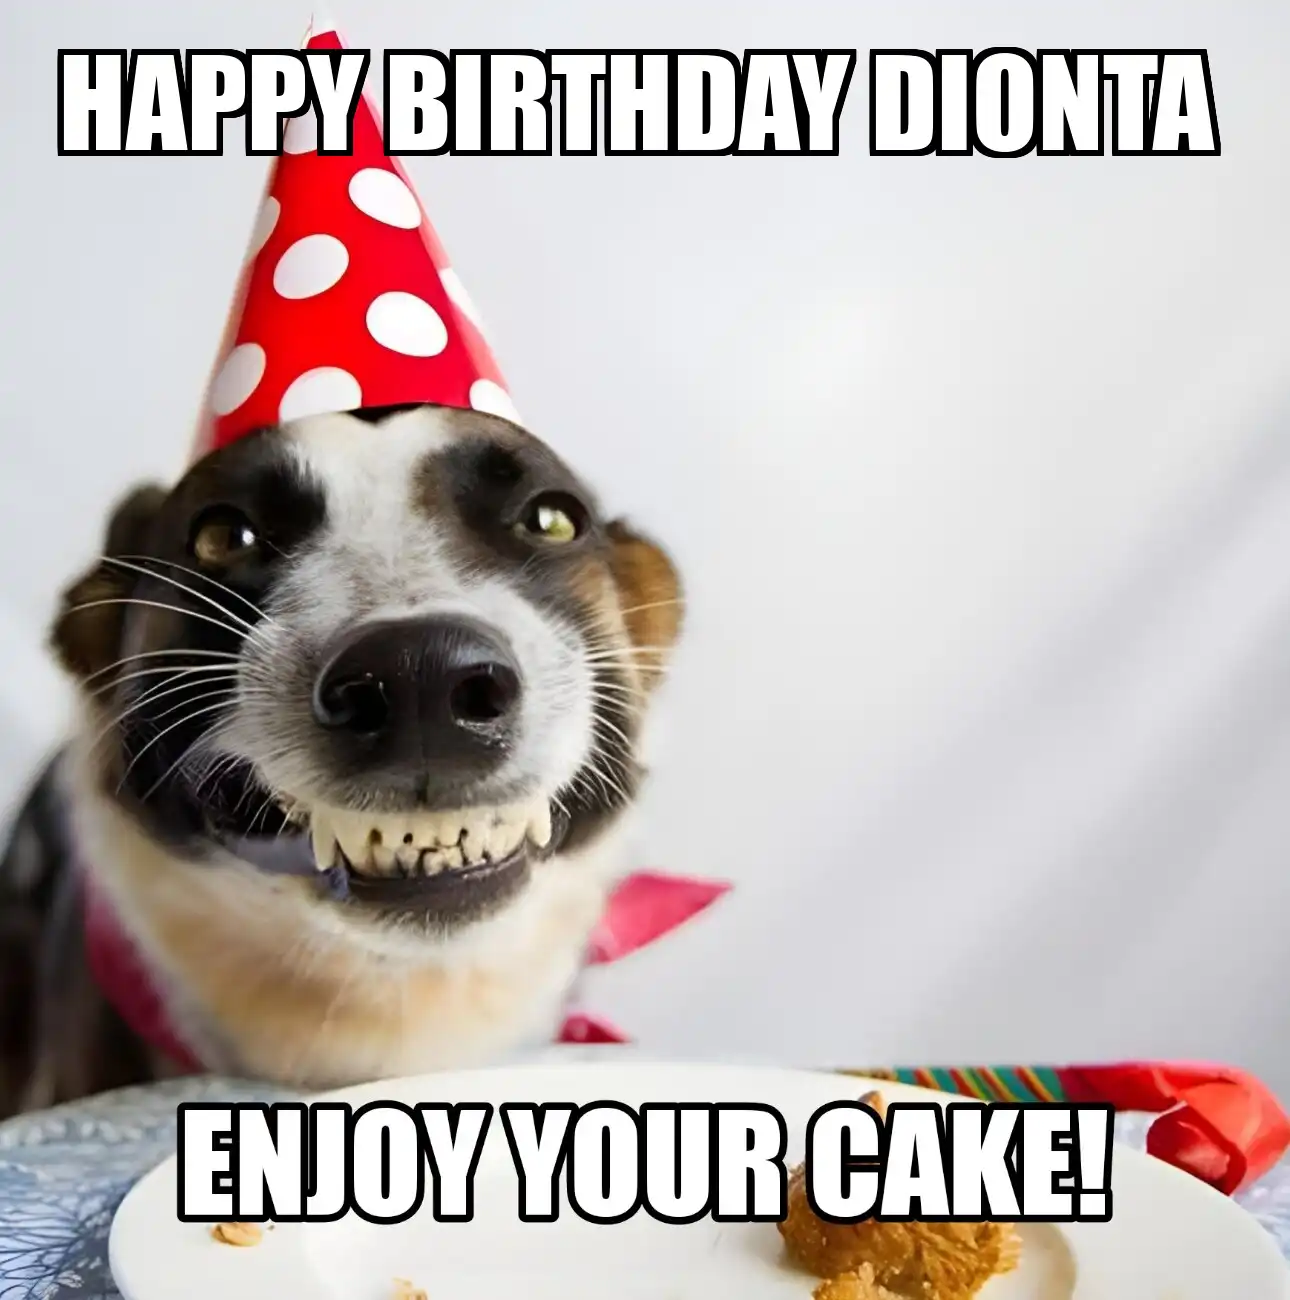 Happy Birthday Dionta Enjoy Your Cake Dog Meme